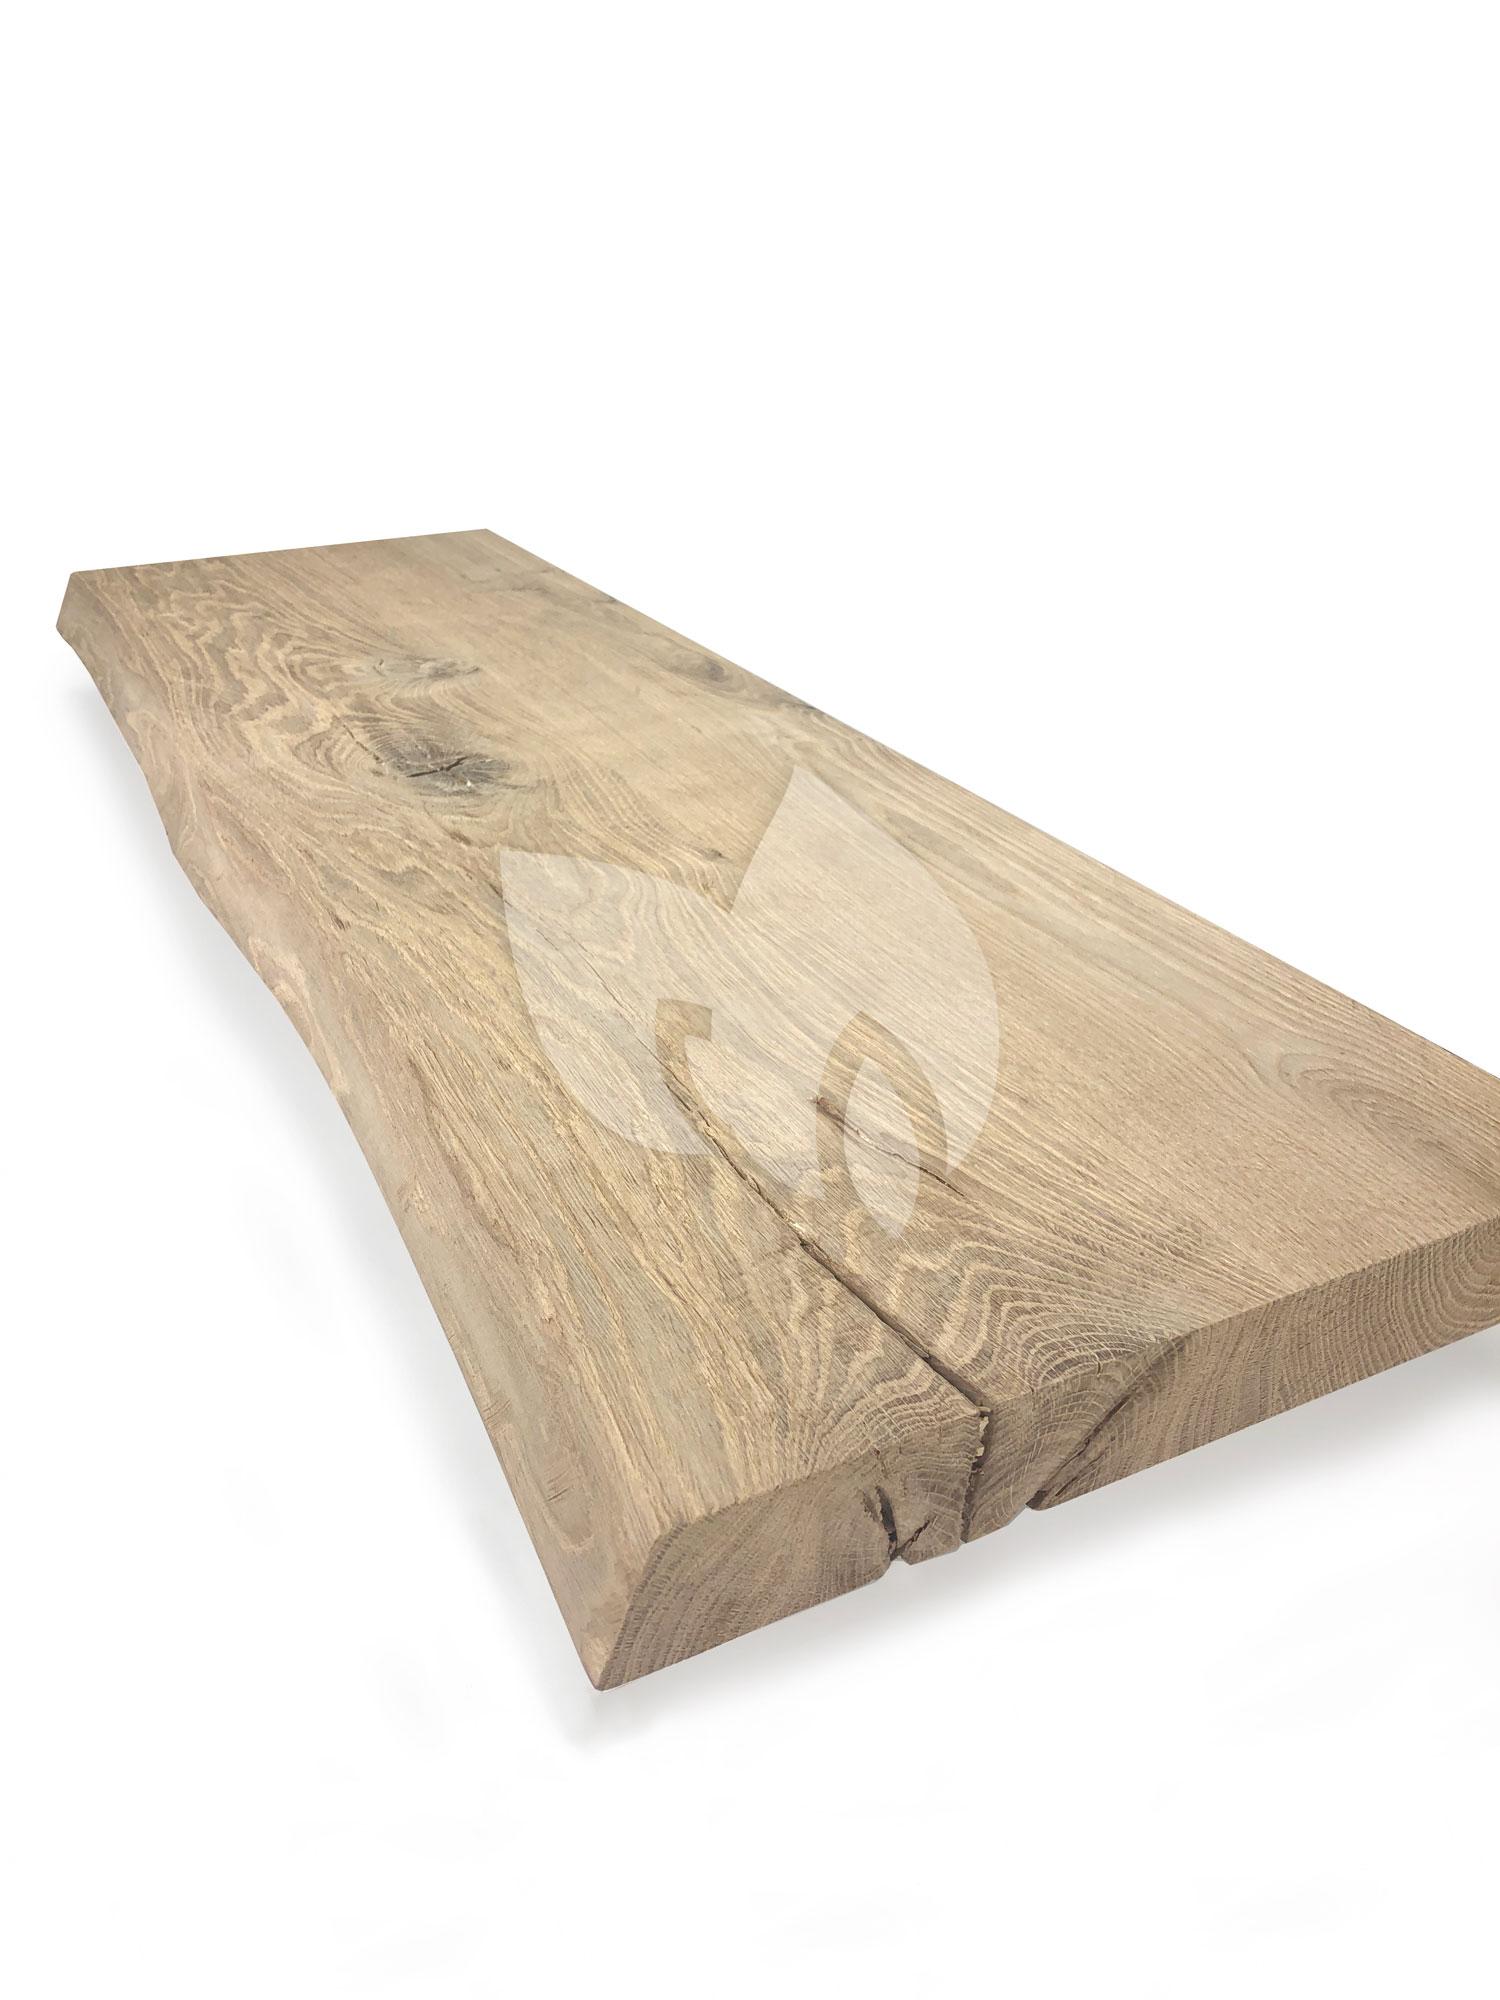 Wegenbouwproces Verbeteren Hond Wood Brothers Oud eiken plank massief boomstam 80 x 20 cm | Tuinexpress.nl